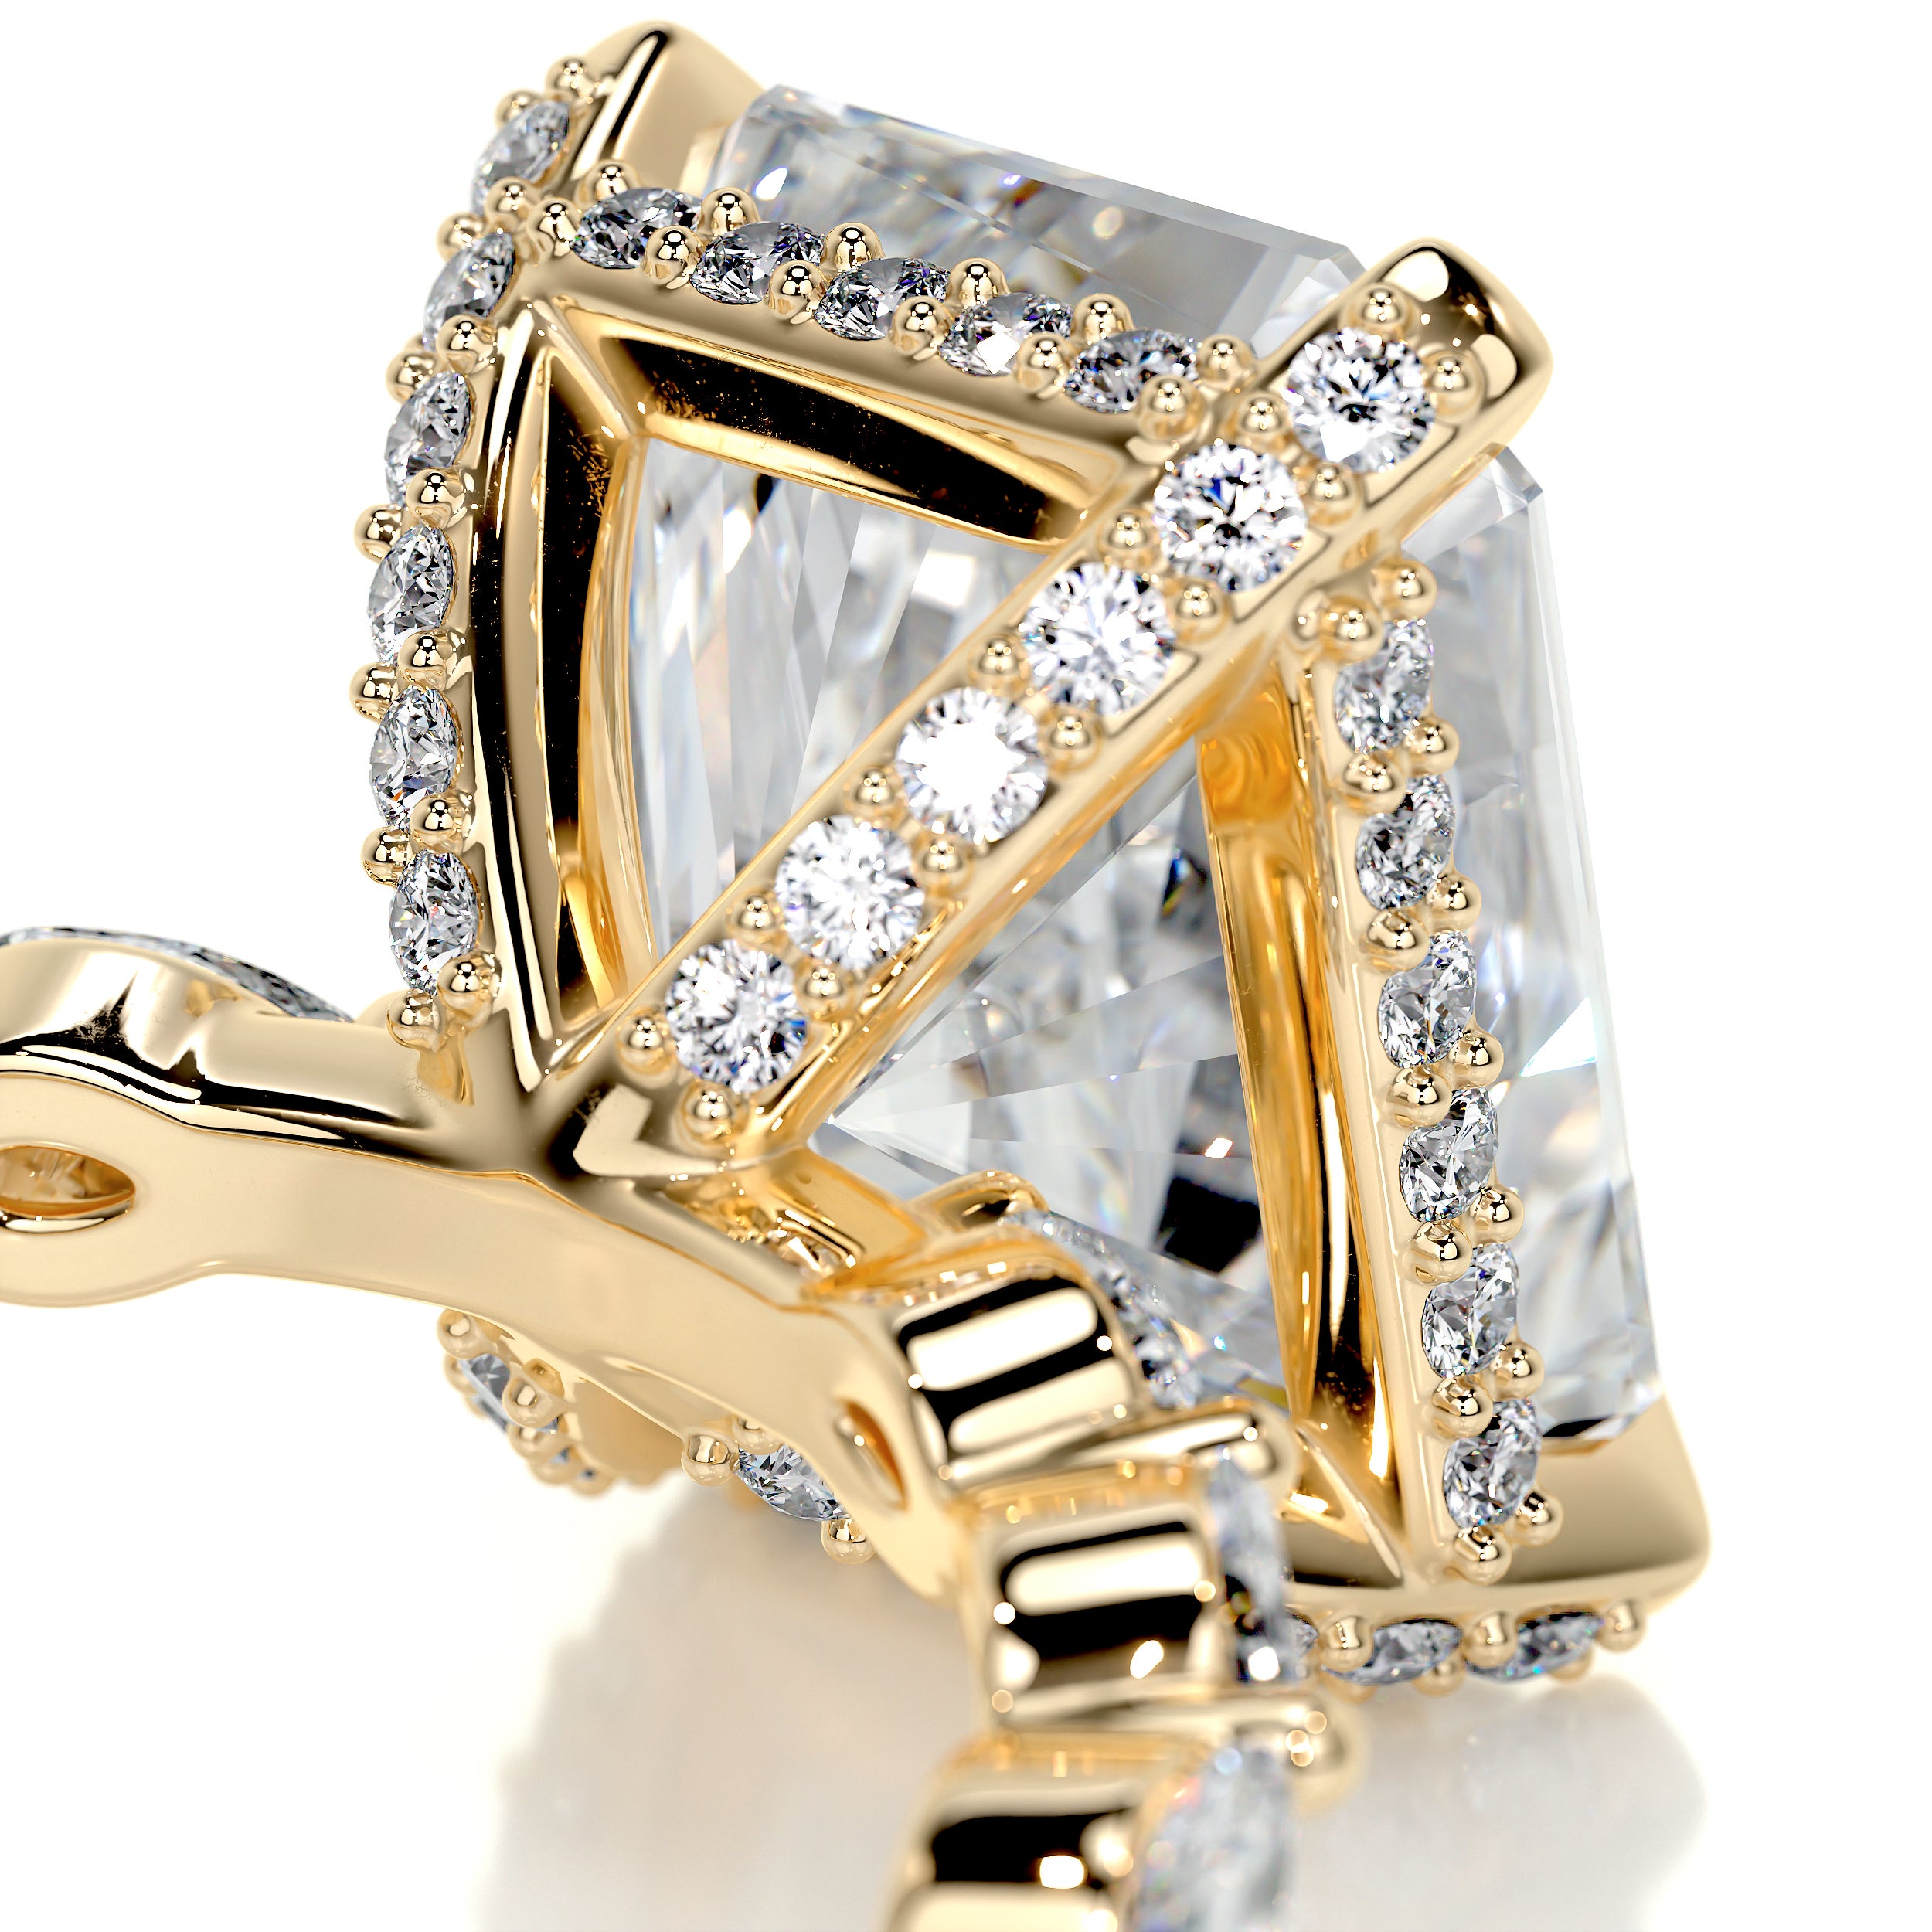 Robin Diamond Engagement Ring -18K Yellow Gold